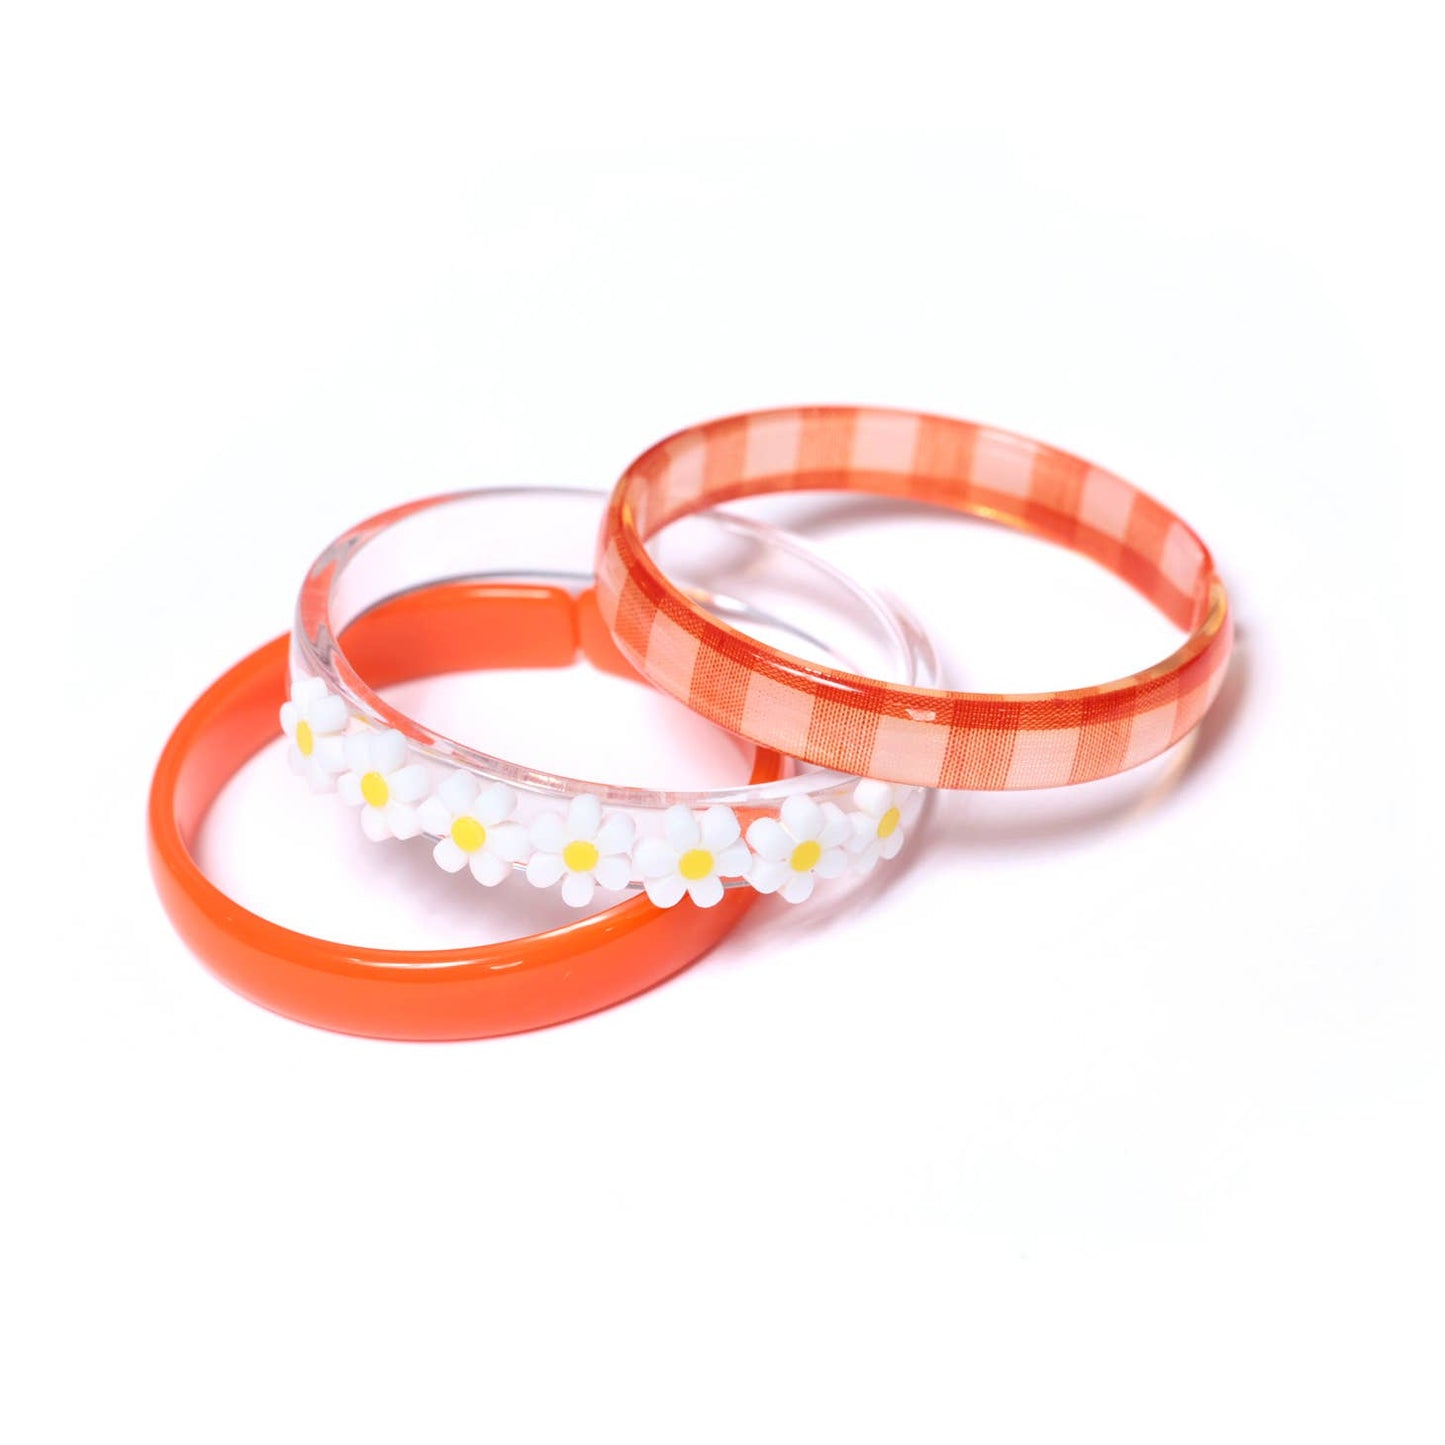 Lilies and Roses Acrylic Bangle Bracelets Set of 3